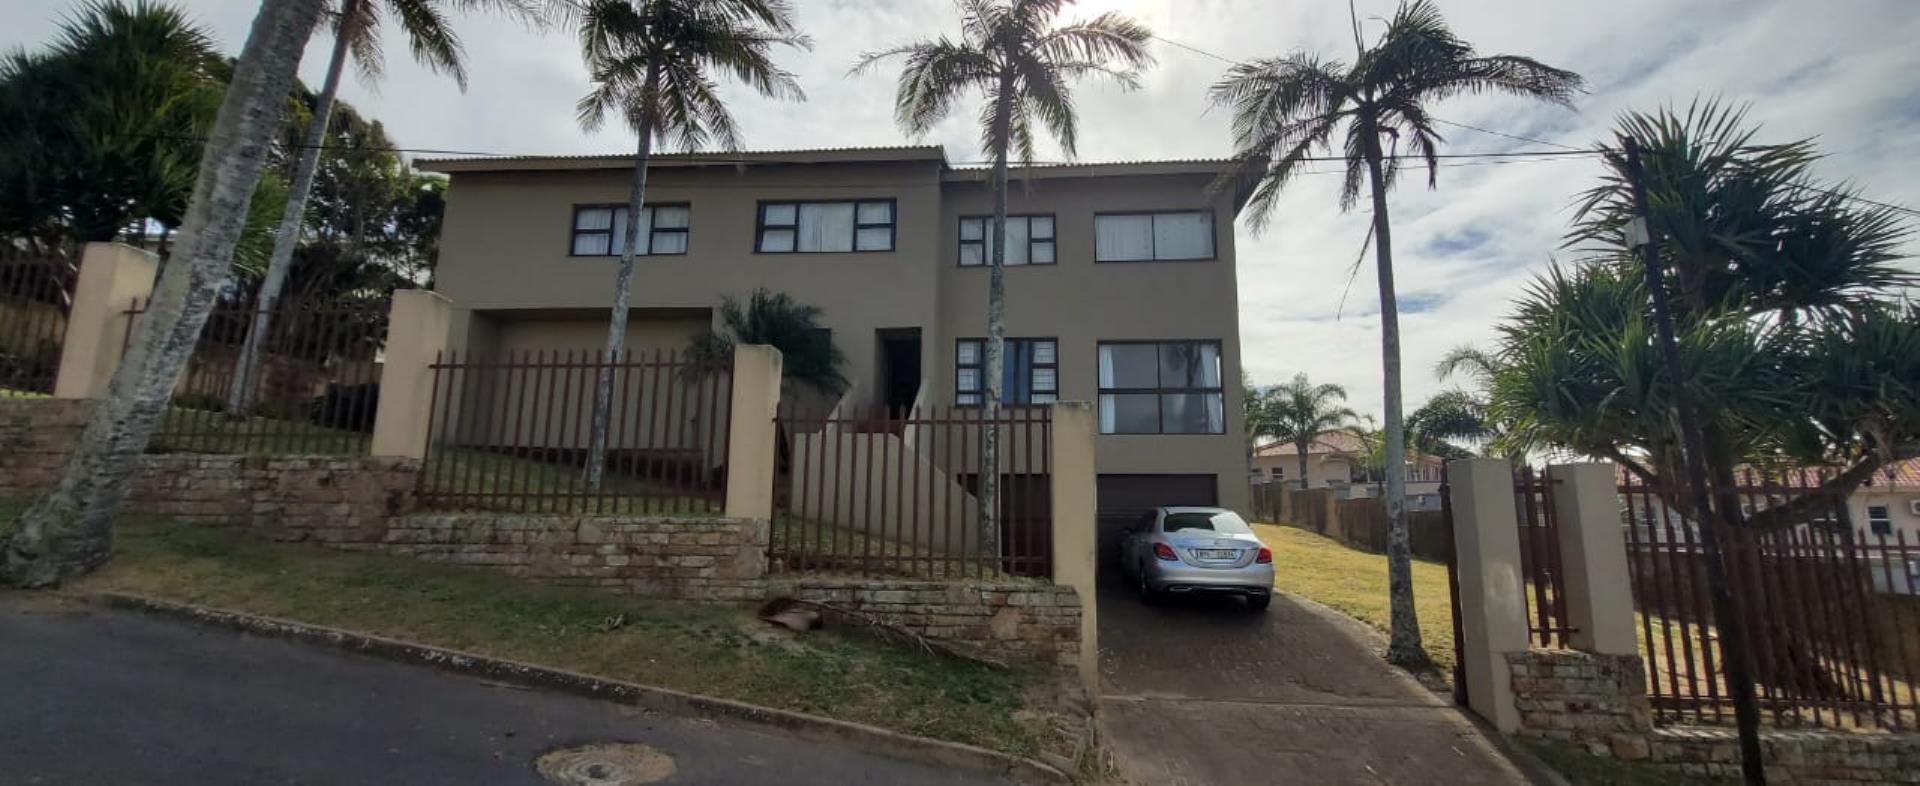 5 Bedroom Duplex for Sale - KwaZulu Natal